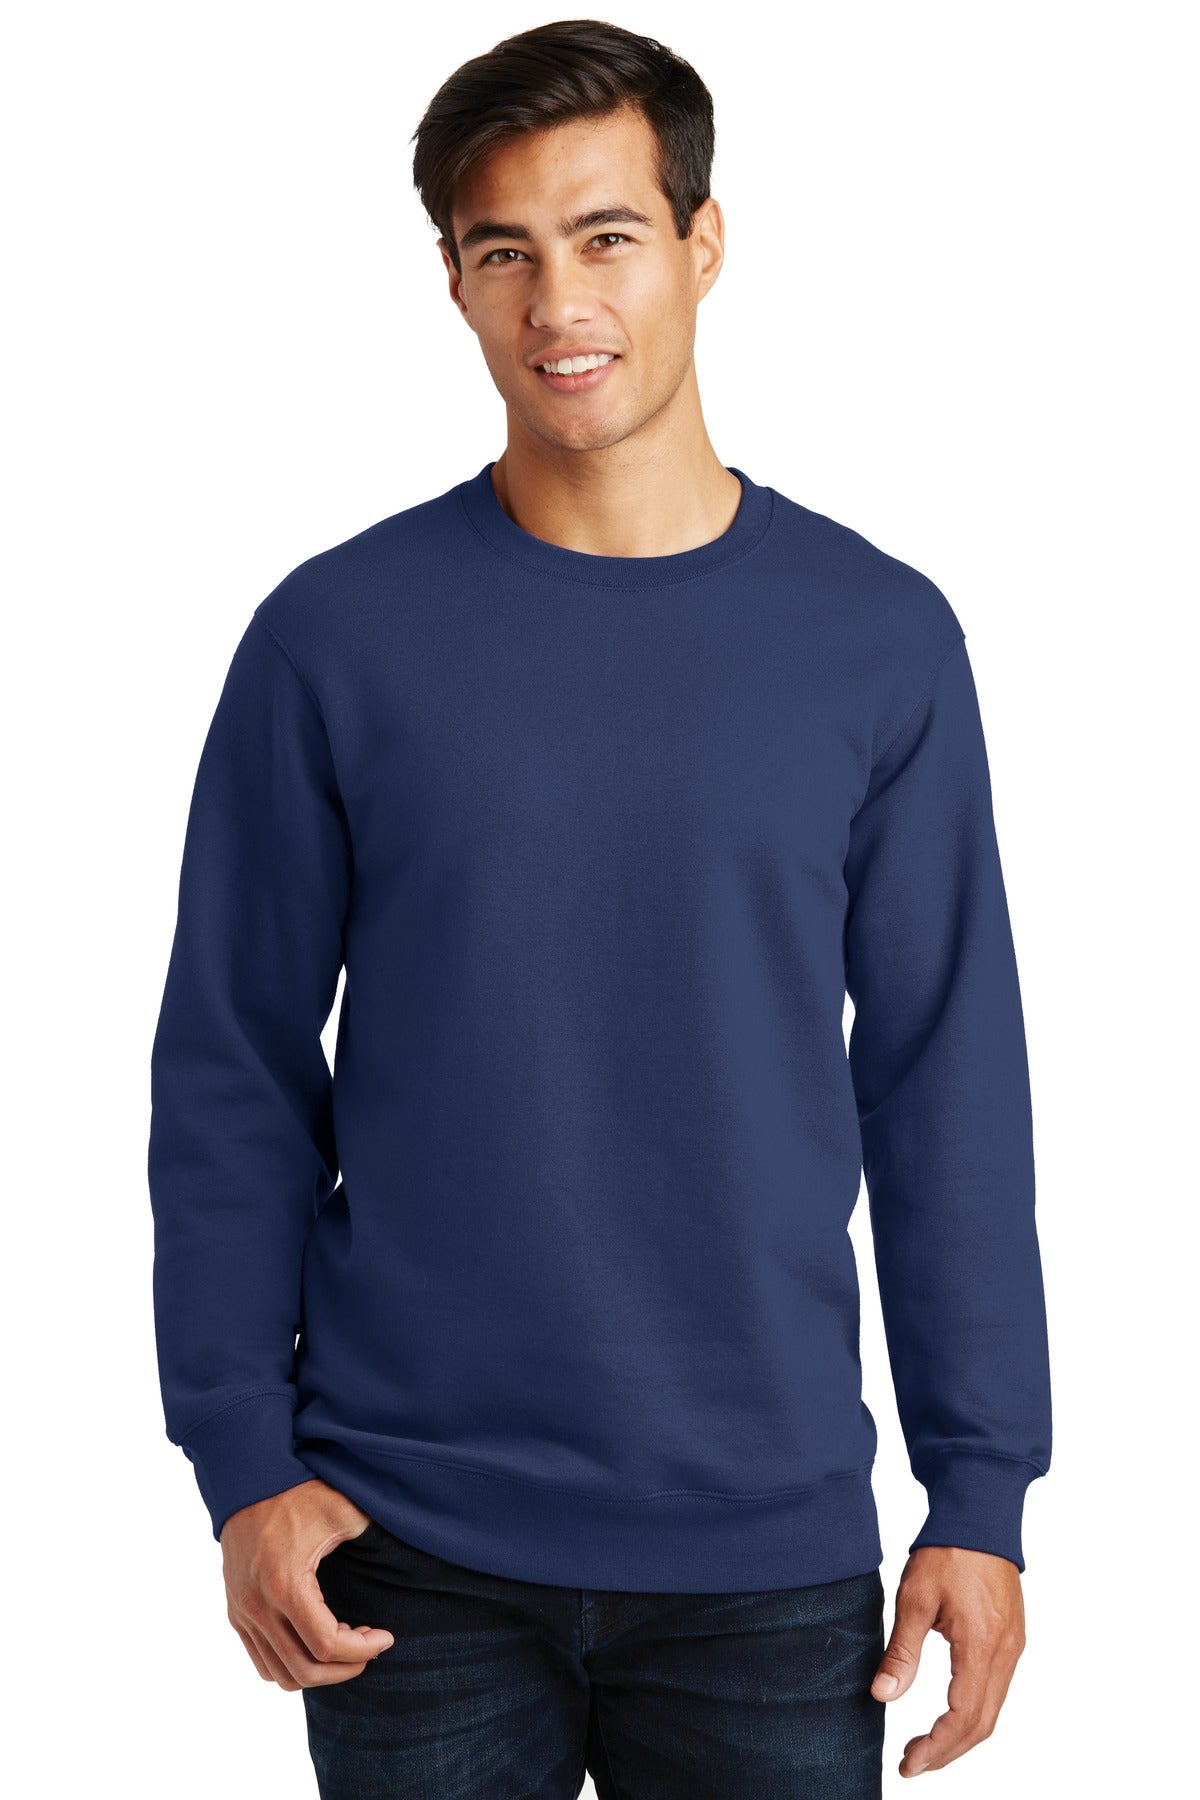 Port & Company® Fan Favorite Fleece Crewneck Sweatshirt. PC850 [Team Navy] - DFW Impression